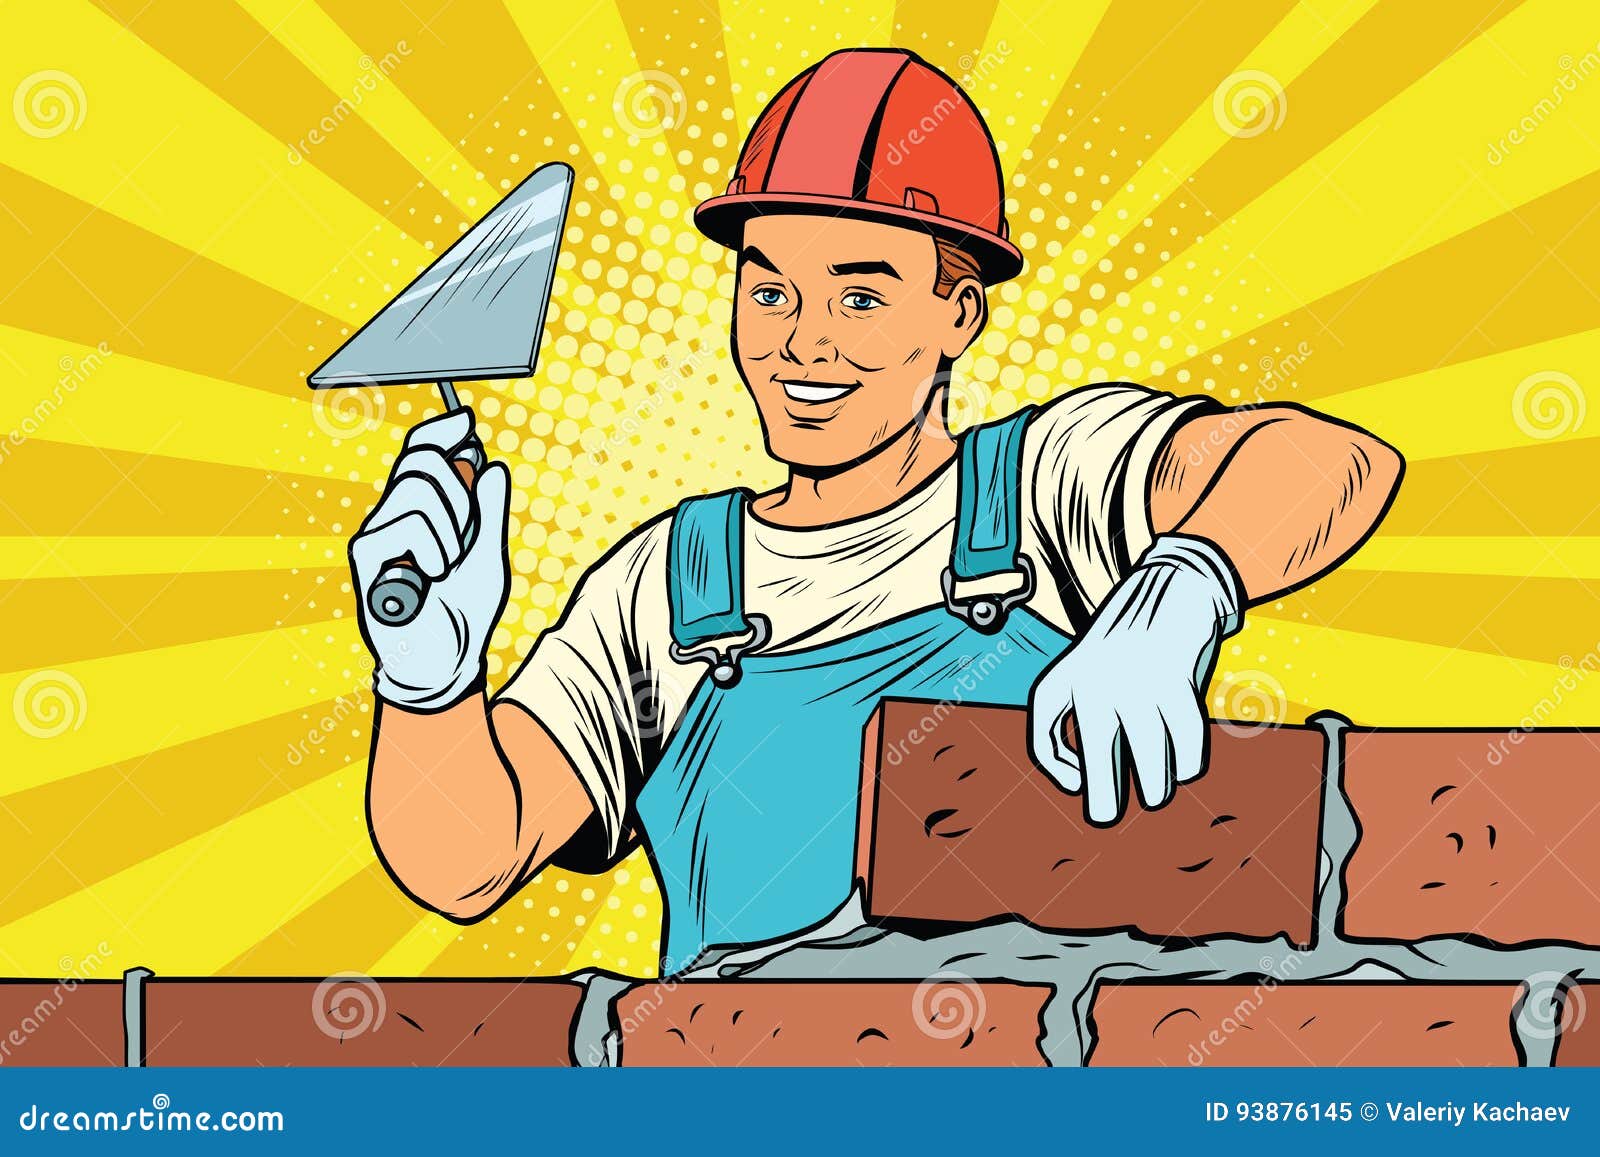 builder brickwork construction and repair